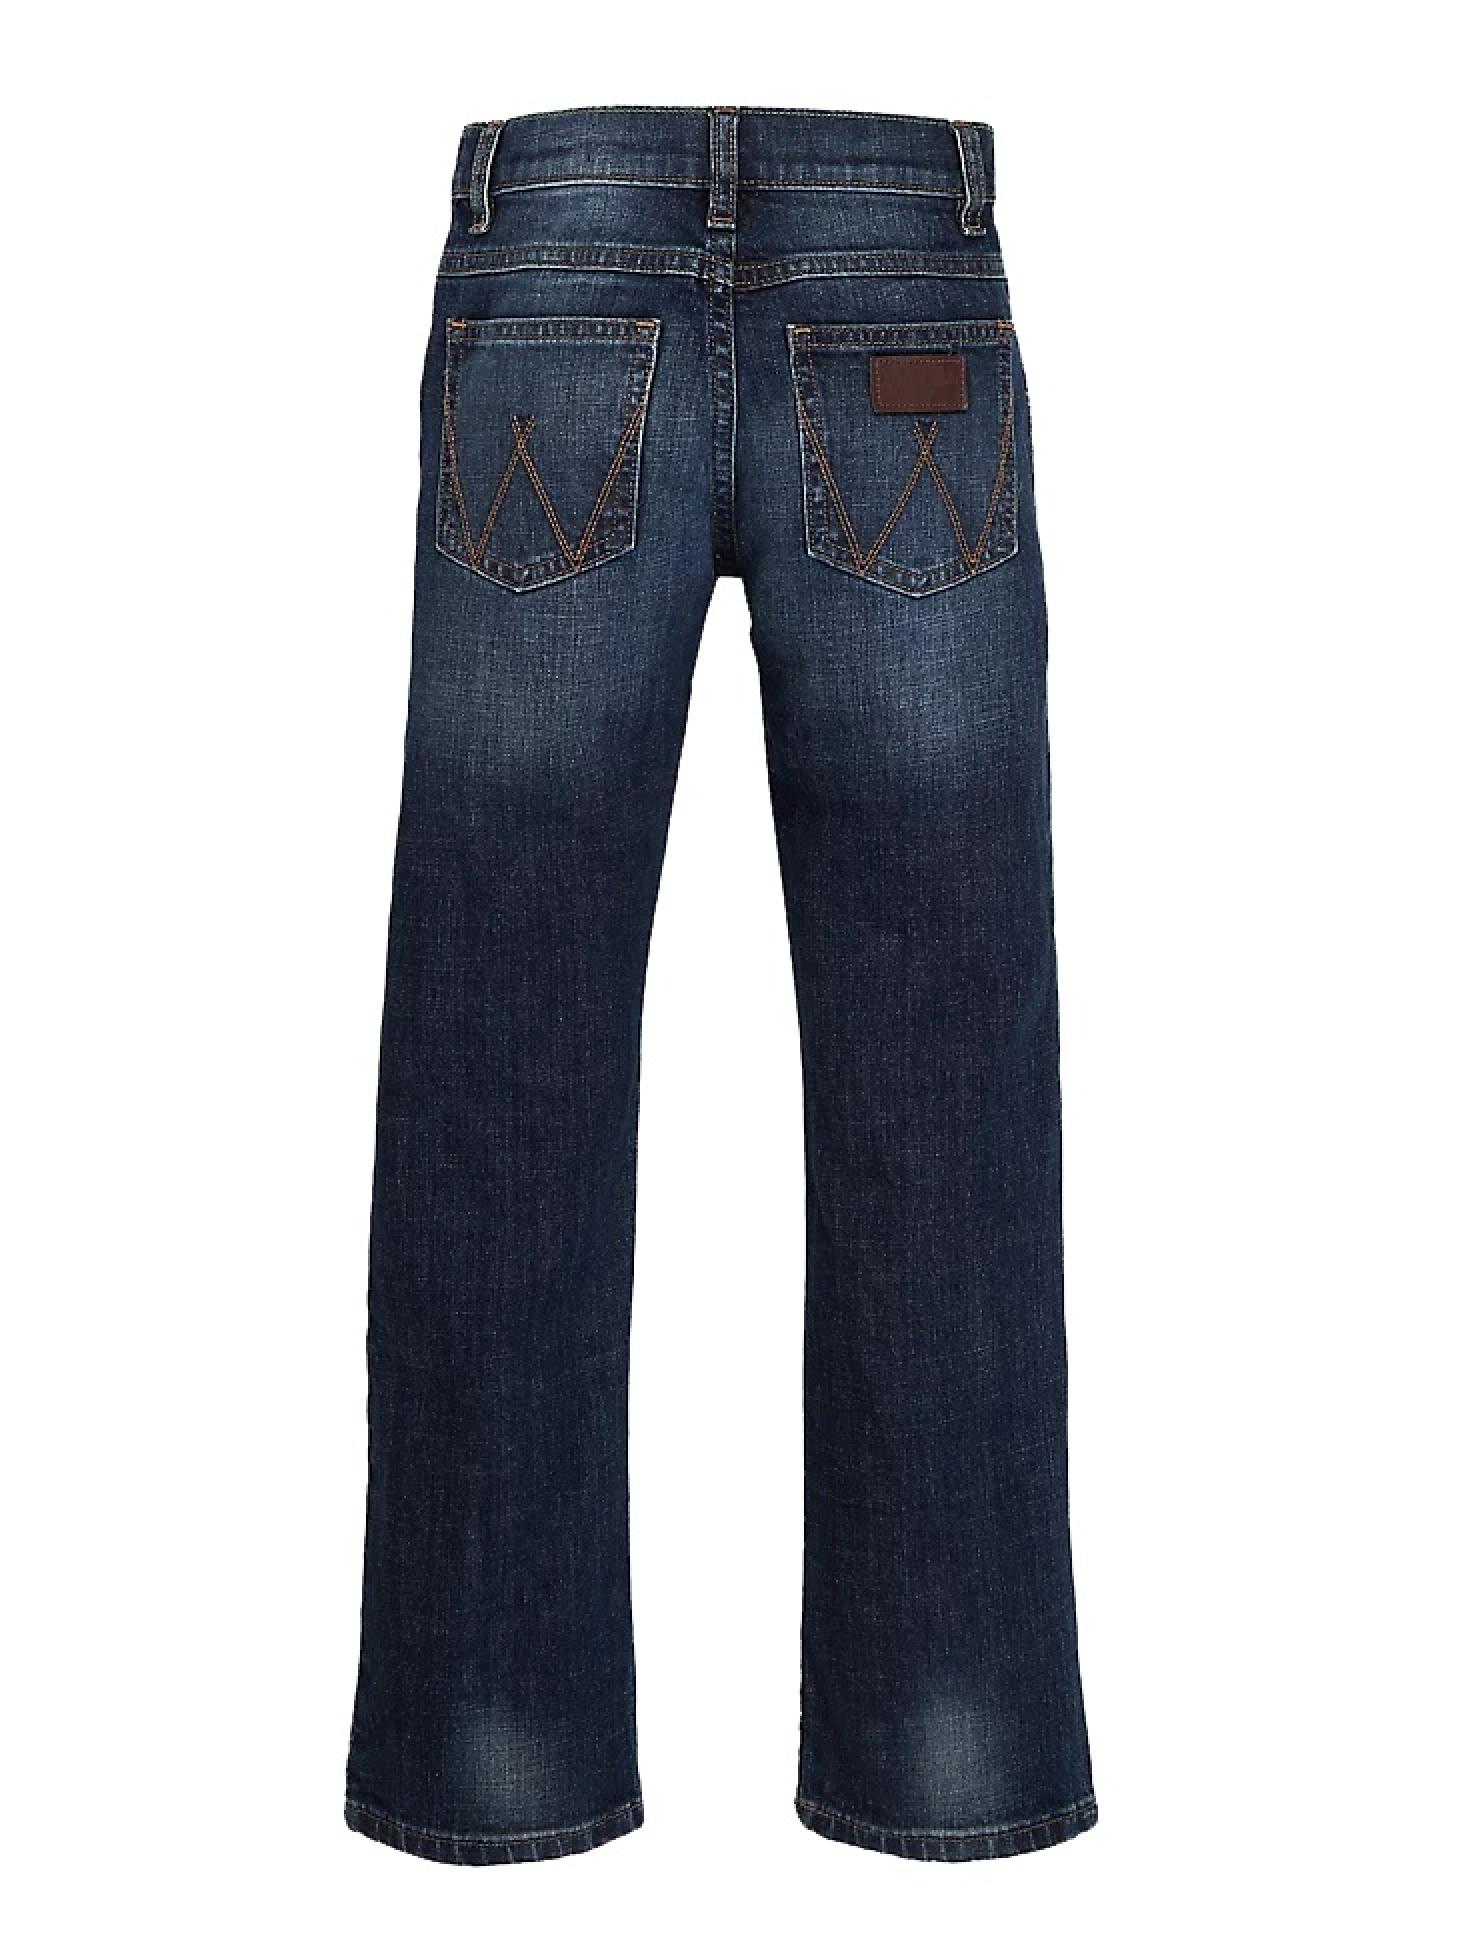 Wrangler Boys Retro Slim Straight Jean